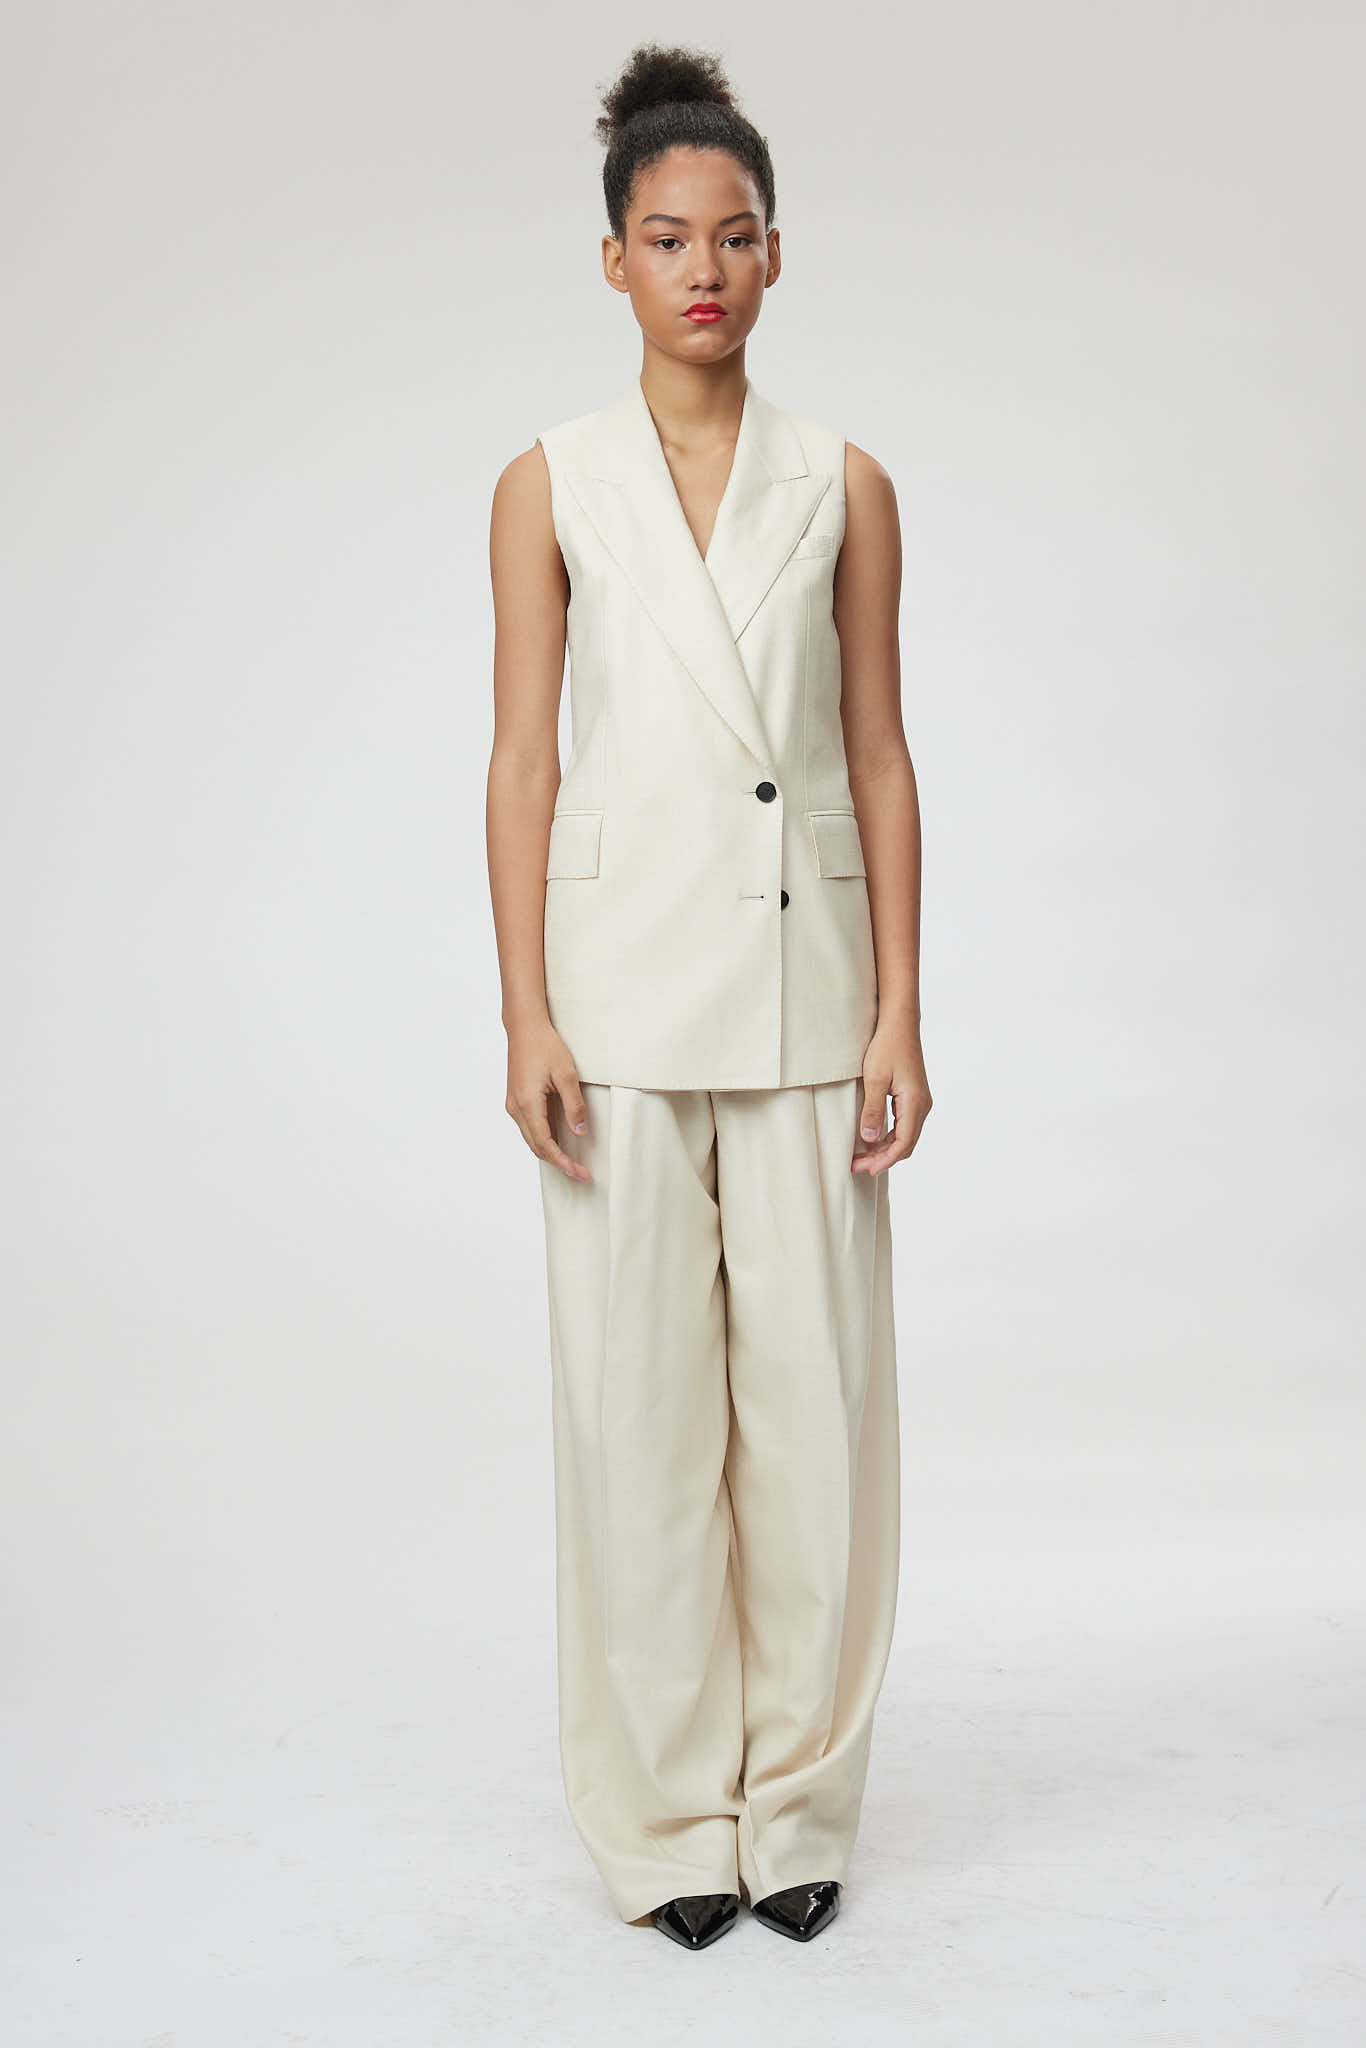 Naples Waistcoat – Loose fit sleeveless waistcoat in off white